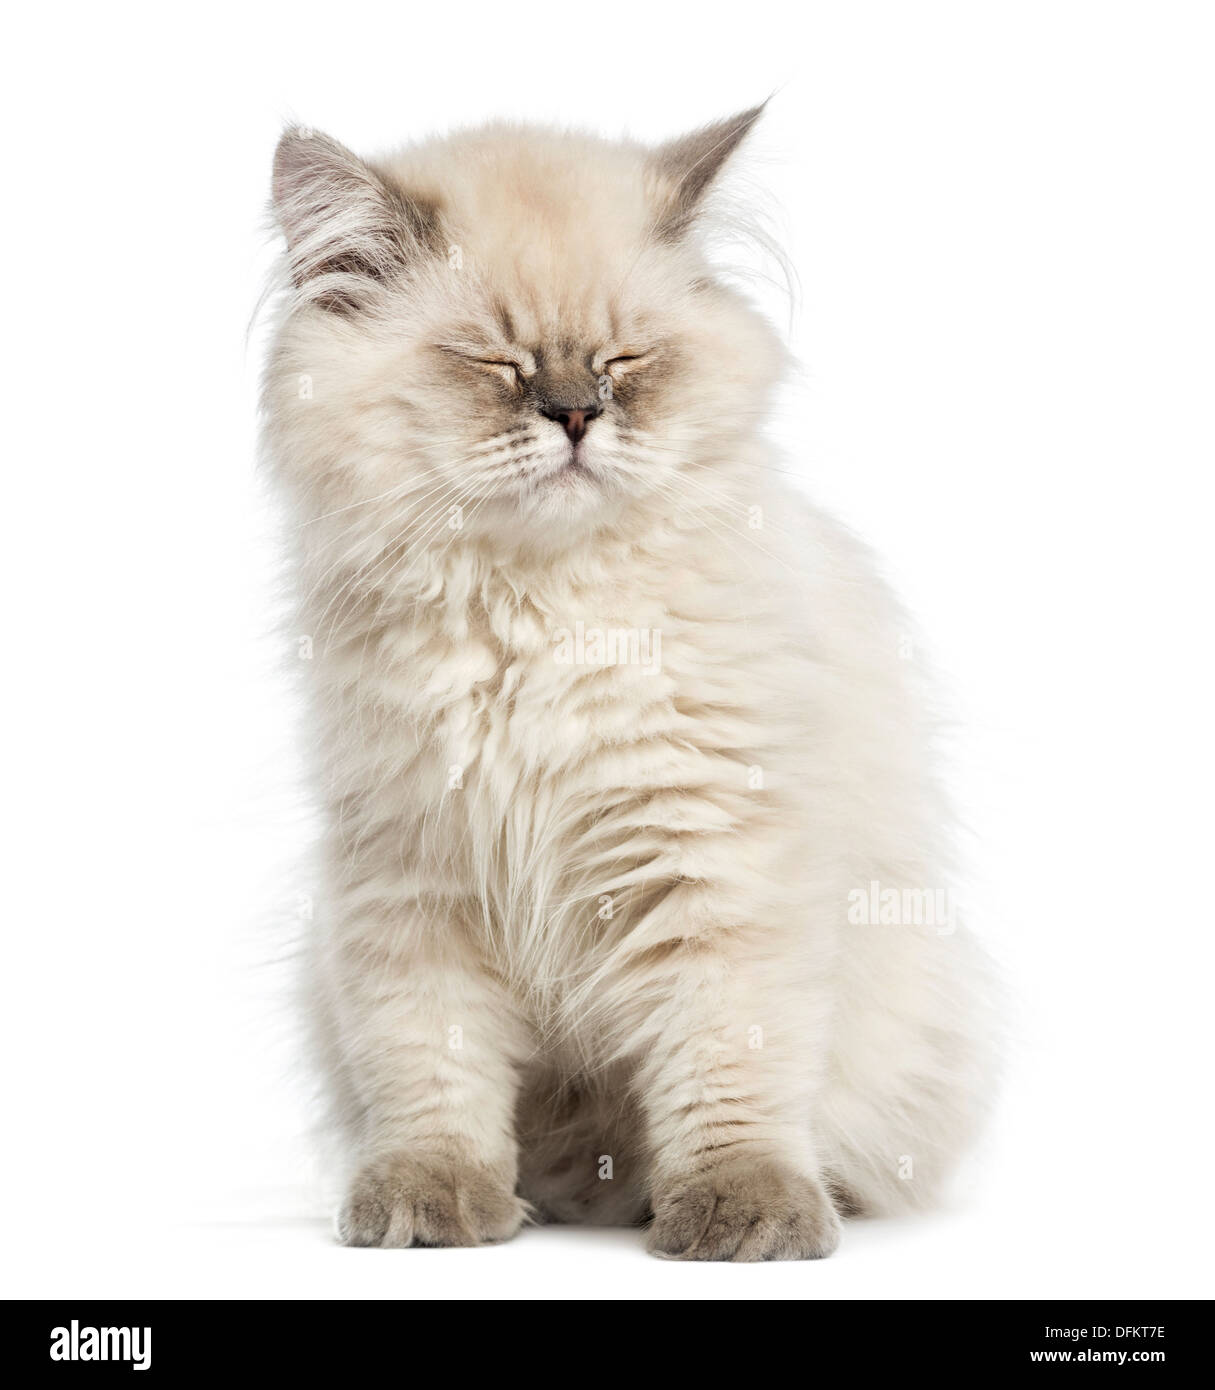 British Longhair kitten, sitting, eyes closed, against white background Stock Photo